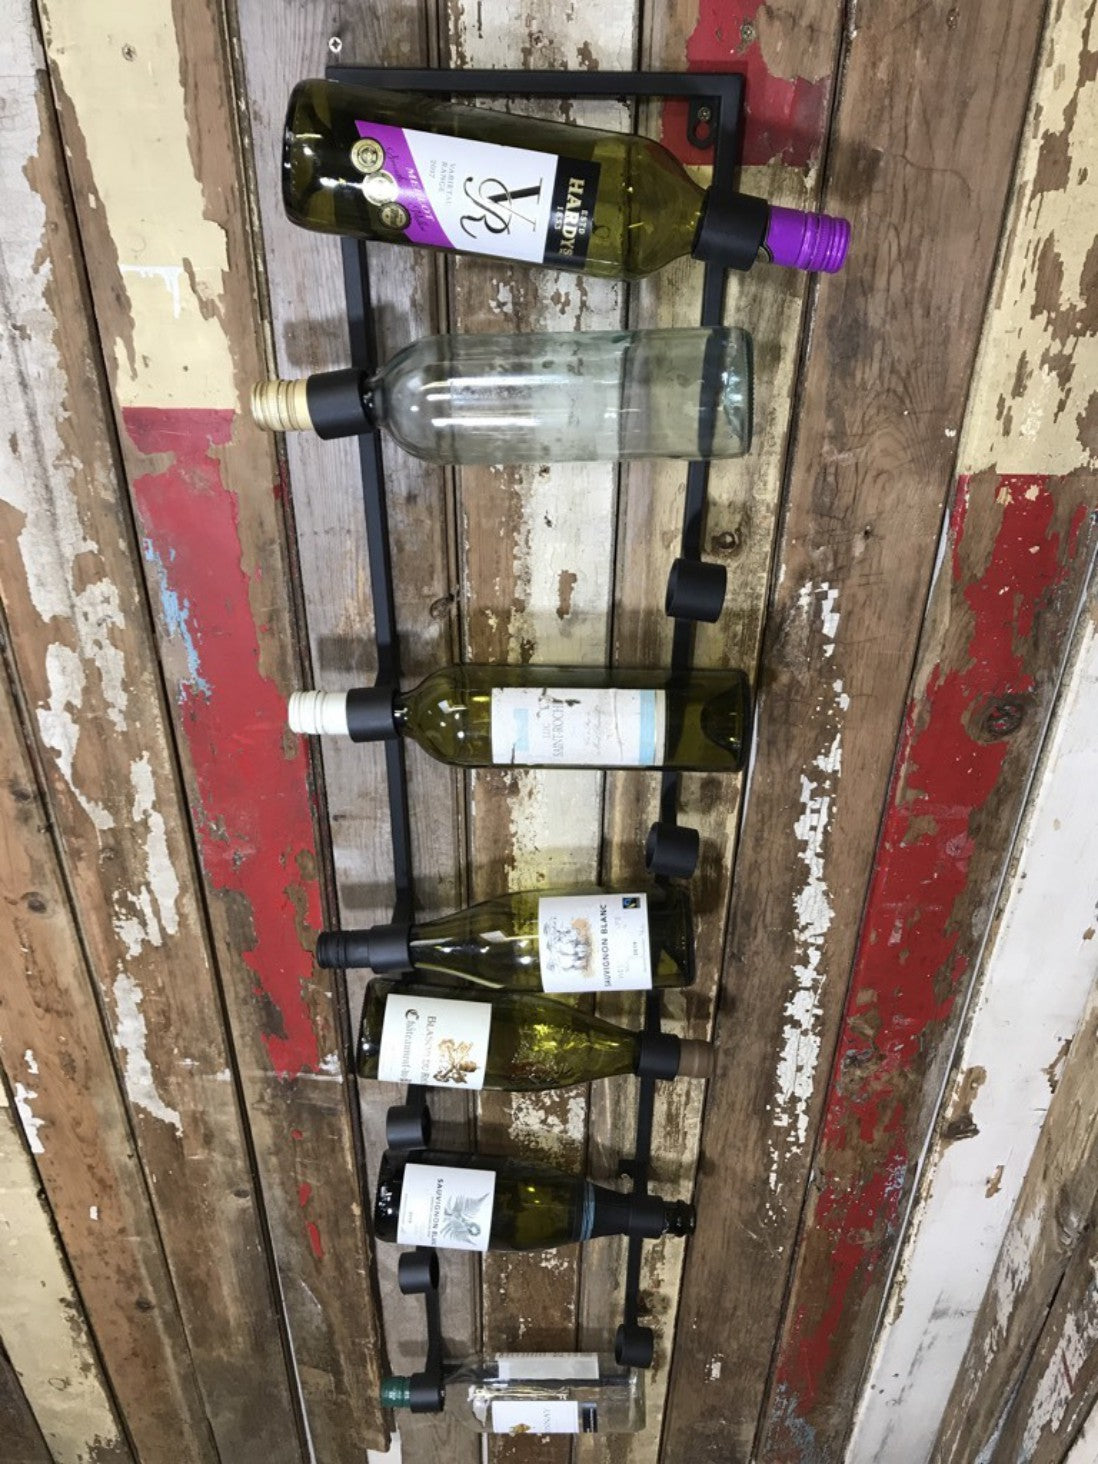 12 Bottle Wine Metal Wall Hanging Rack Holder Industrial Style Steel 135cm Tall